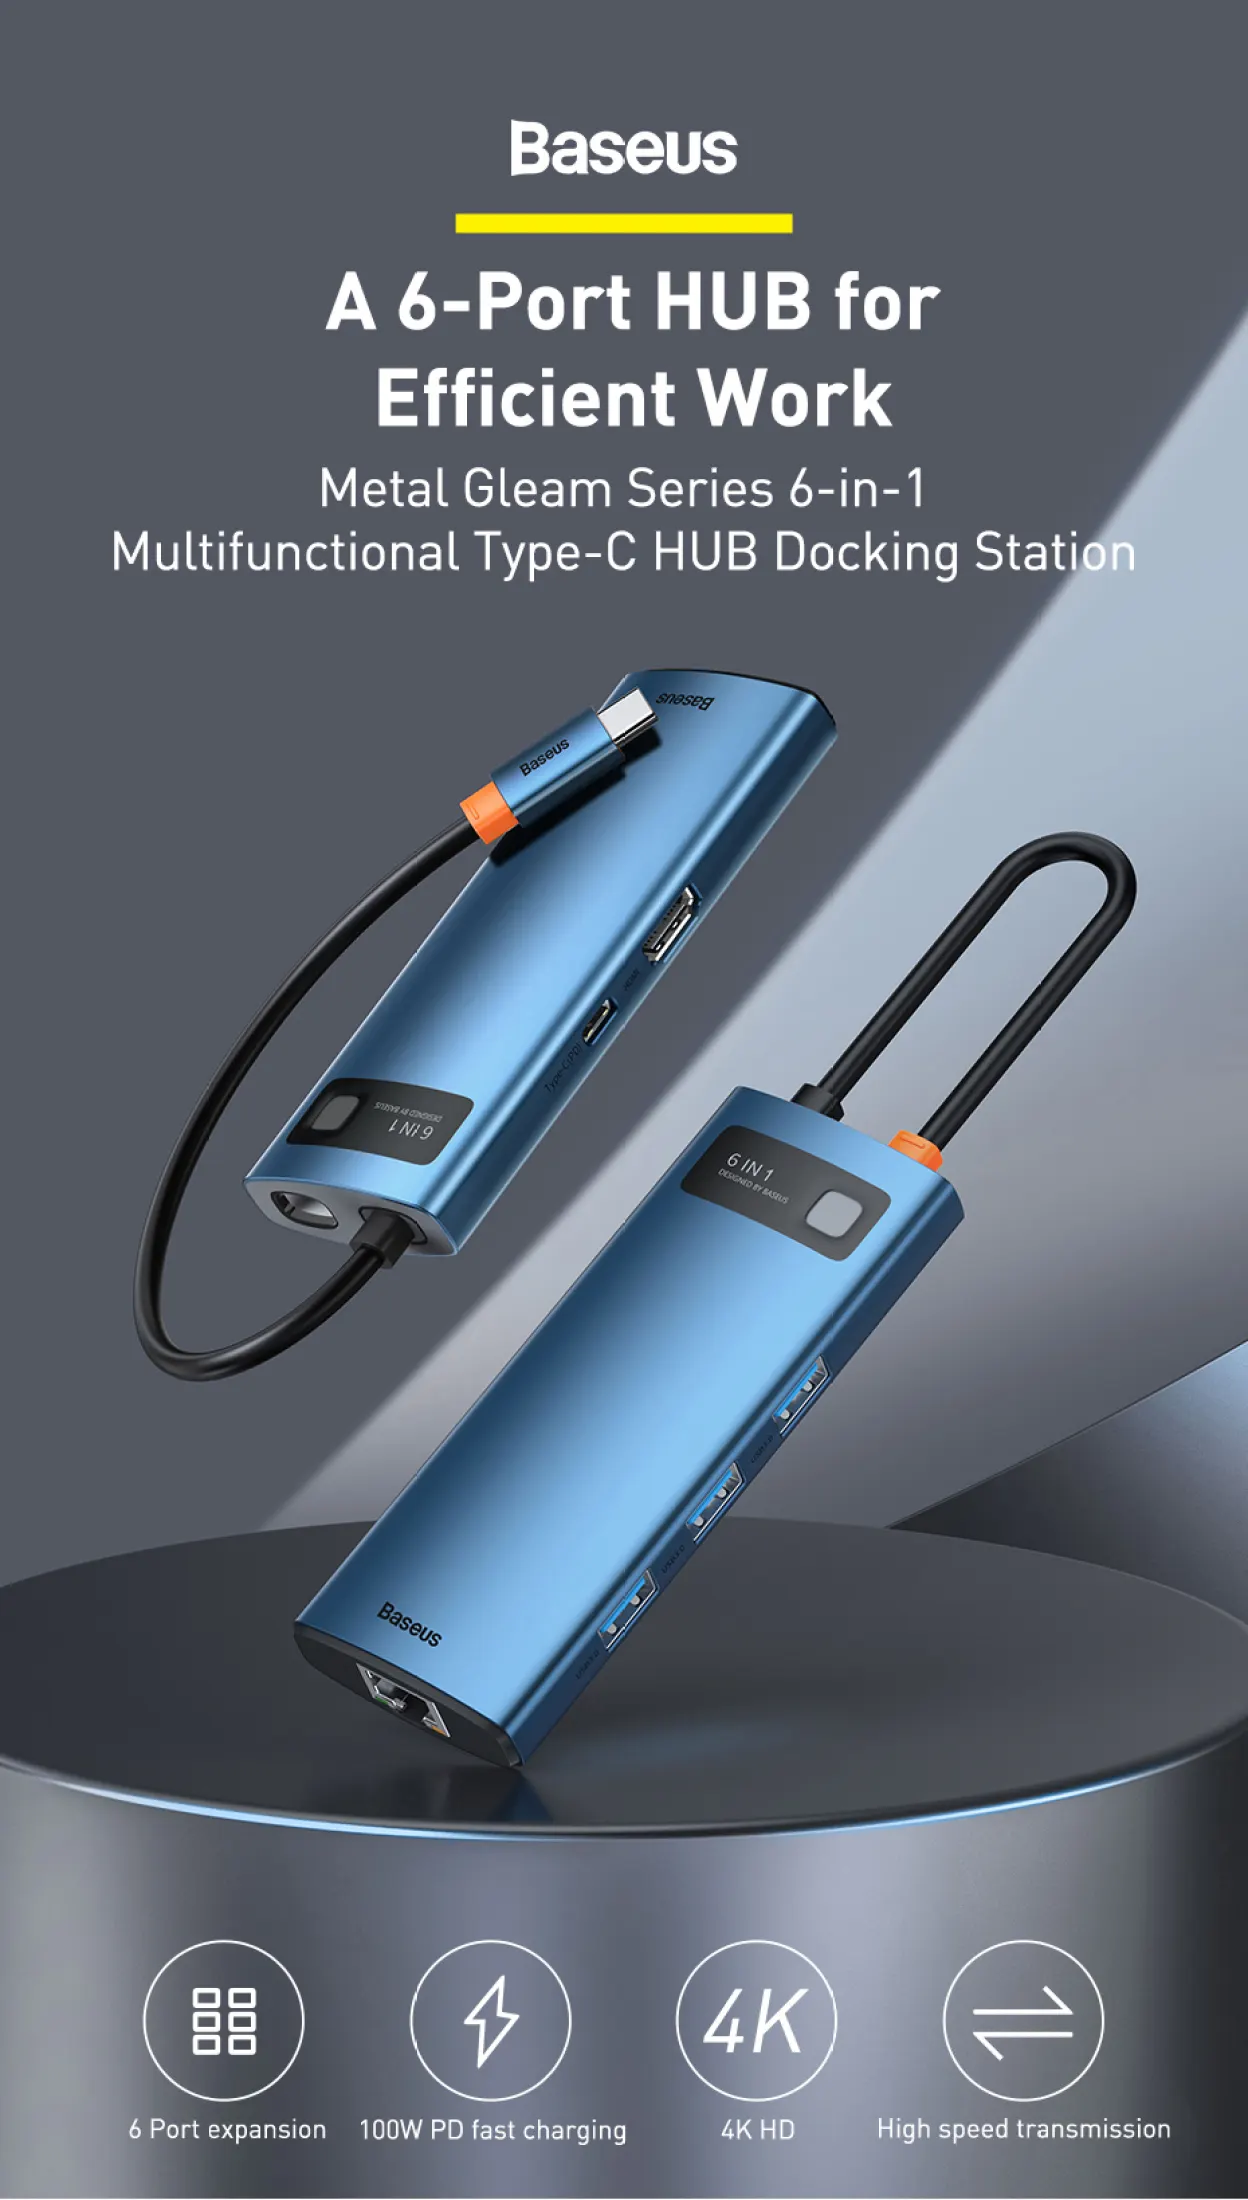 Baseus Metal Gleam Series 6-in-1 Multifunctional Type-C HUB Docking Station buy online best price in pakistan